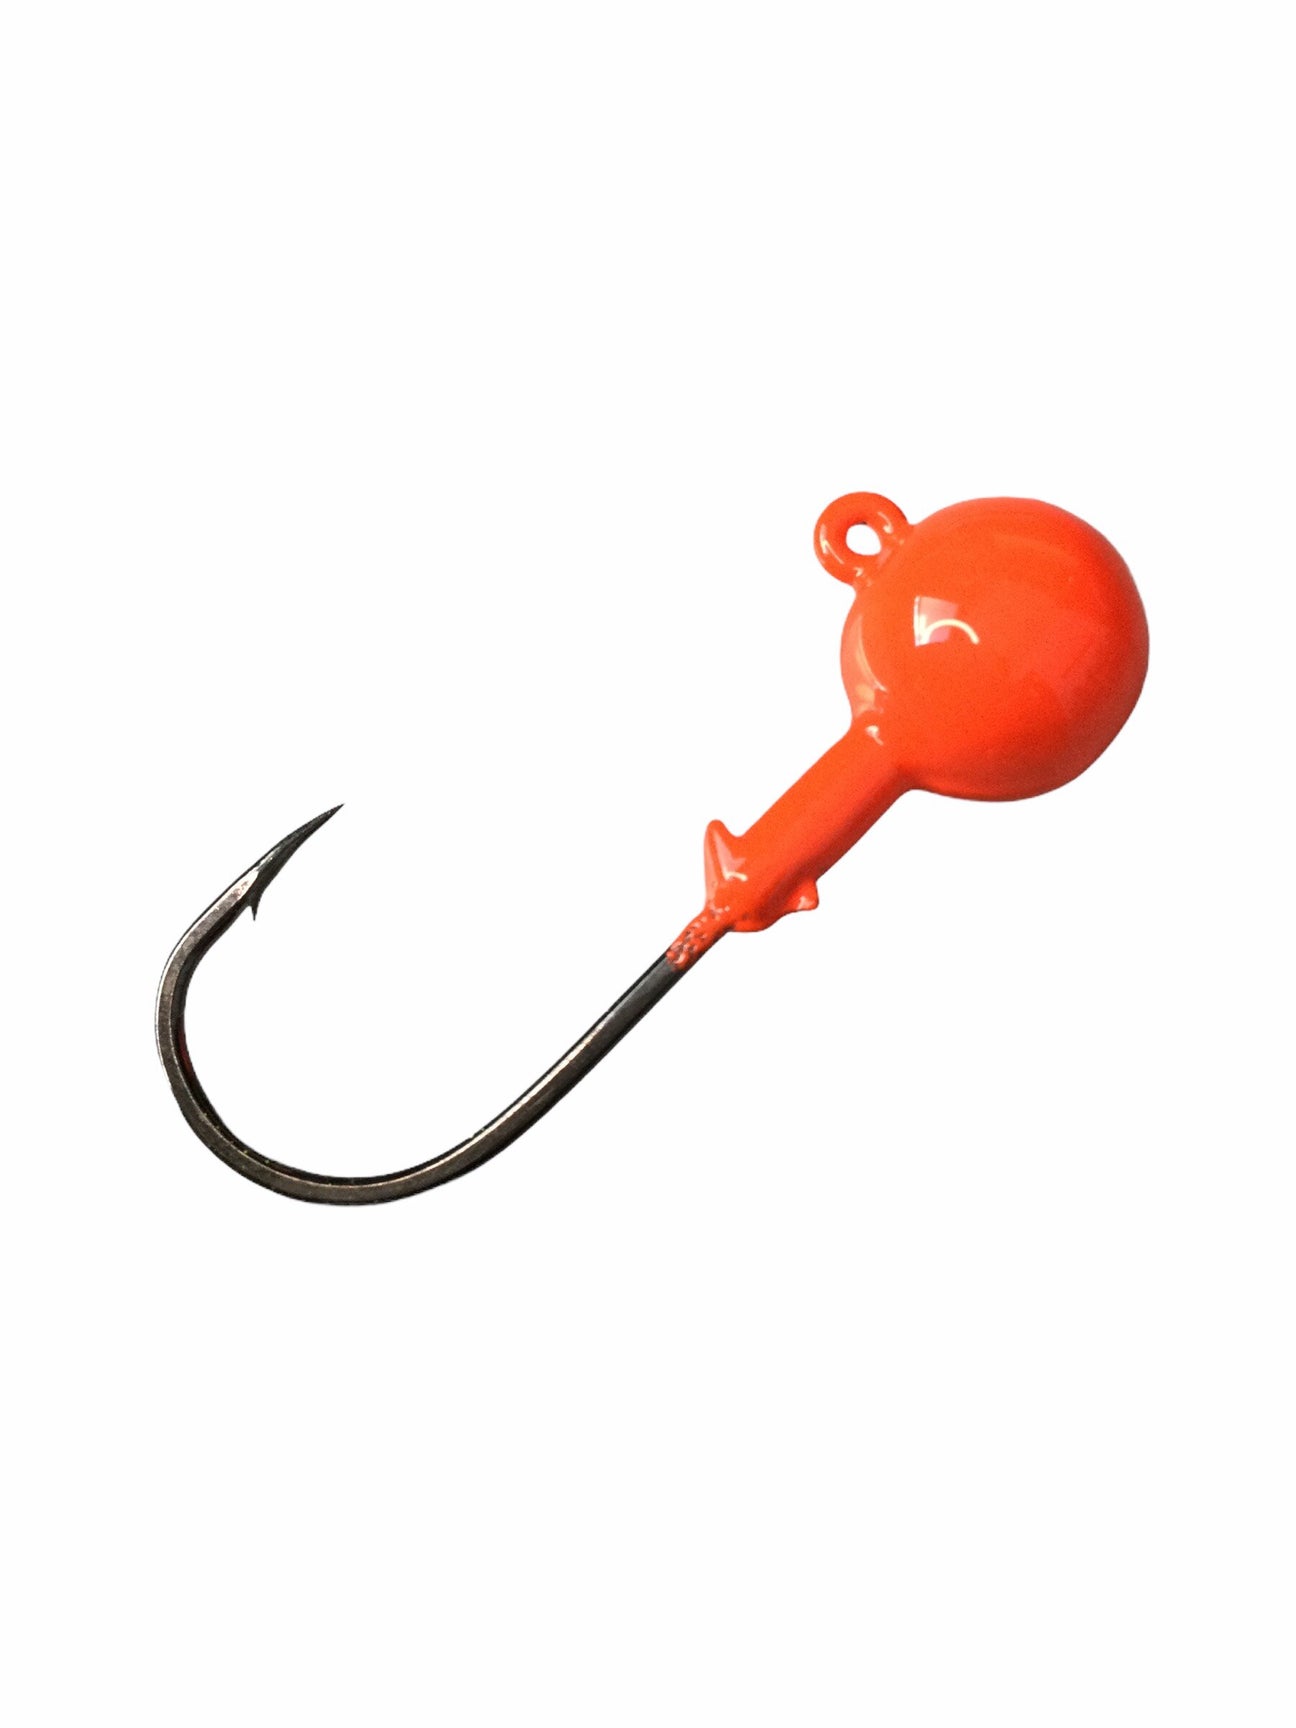 Owner Hooks: 3/8 oz Round Ball Lead Head Jig Hooks